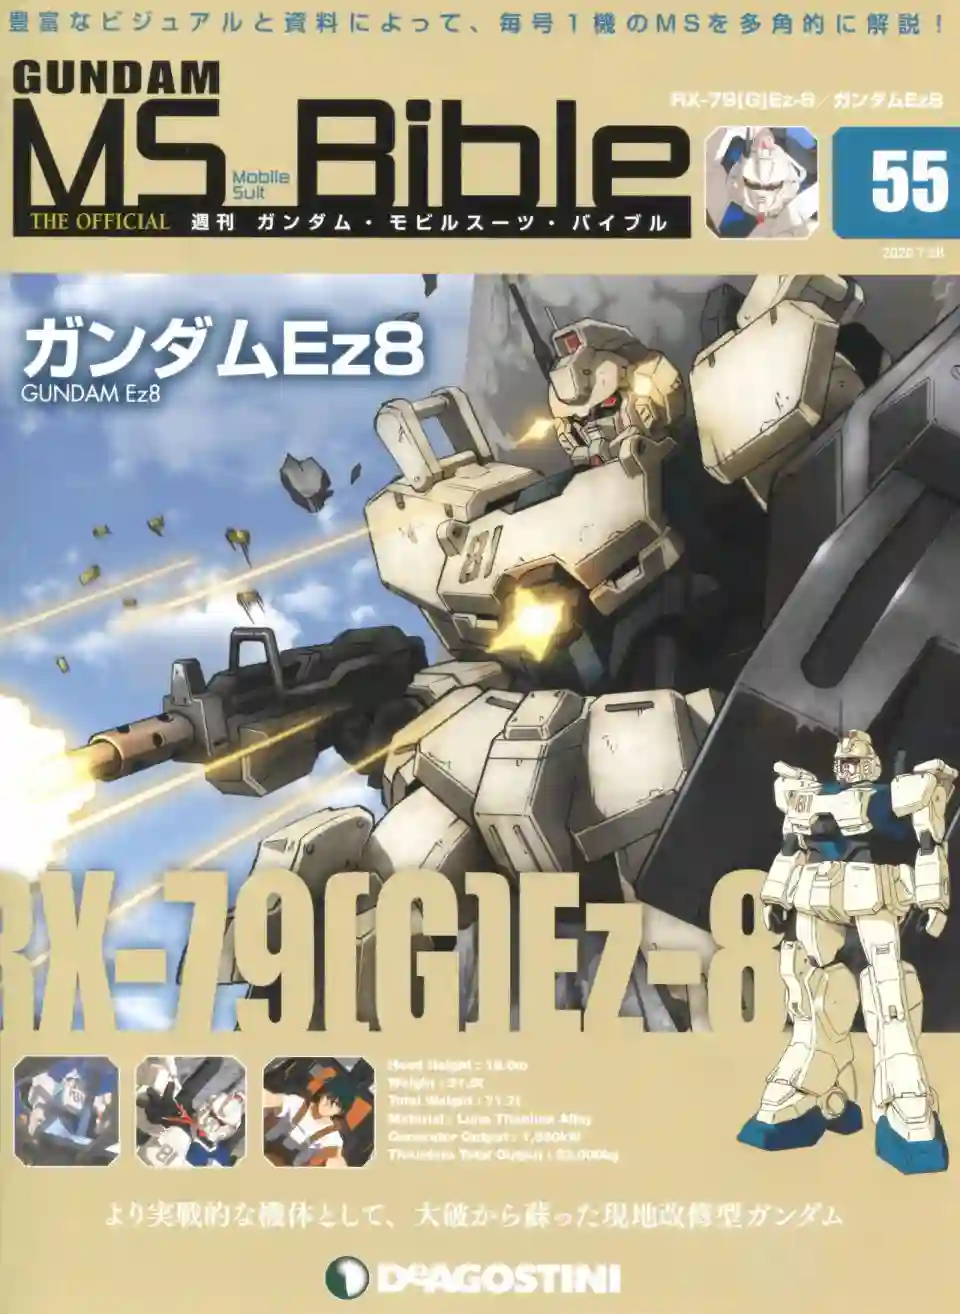 Gundam Mobile Suit Bible第55卷